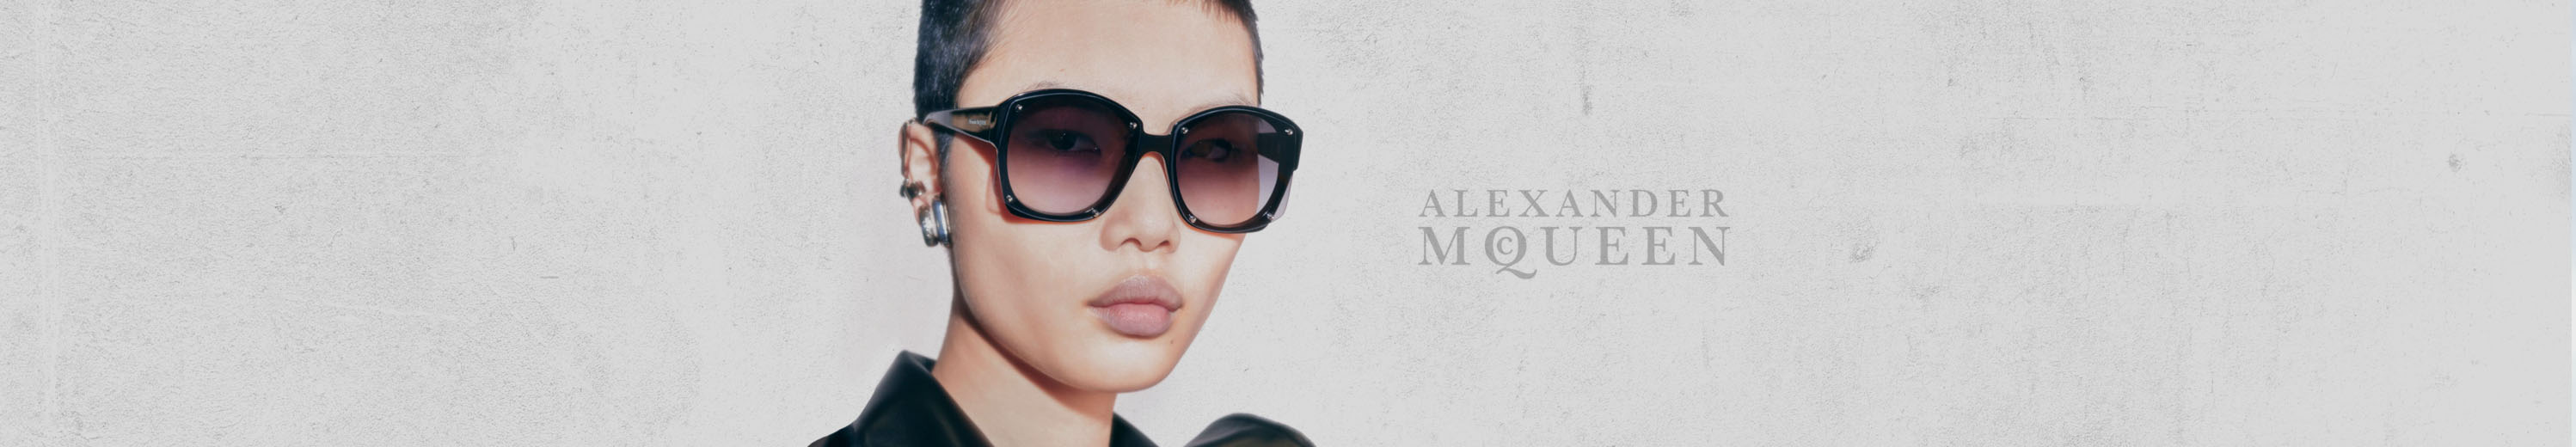 Alexander McQueen Sunglasses for Women